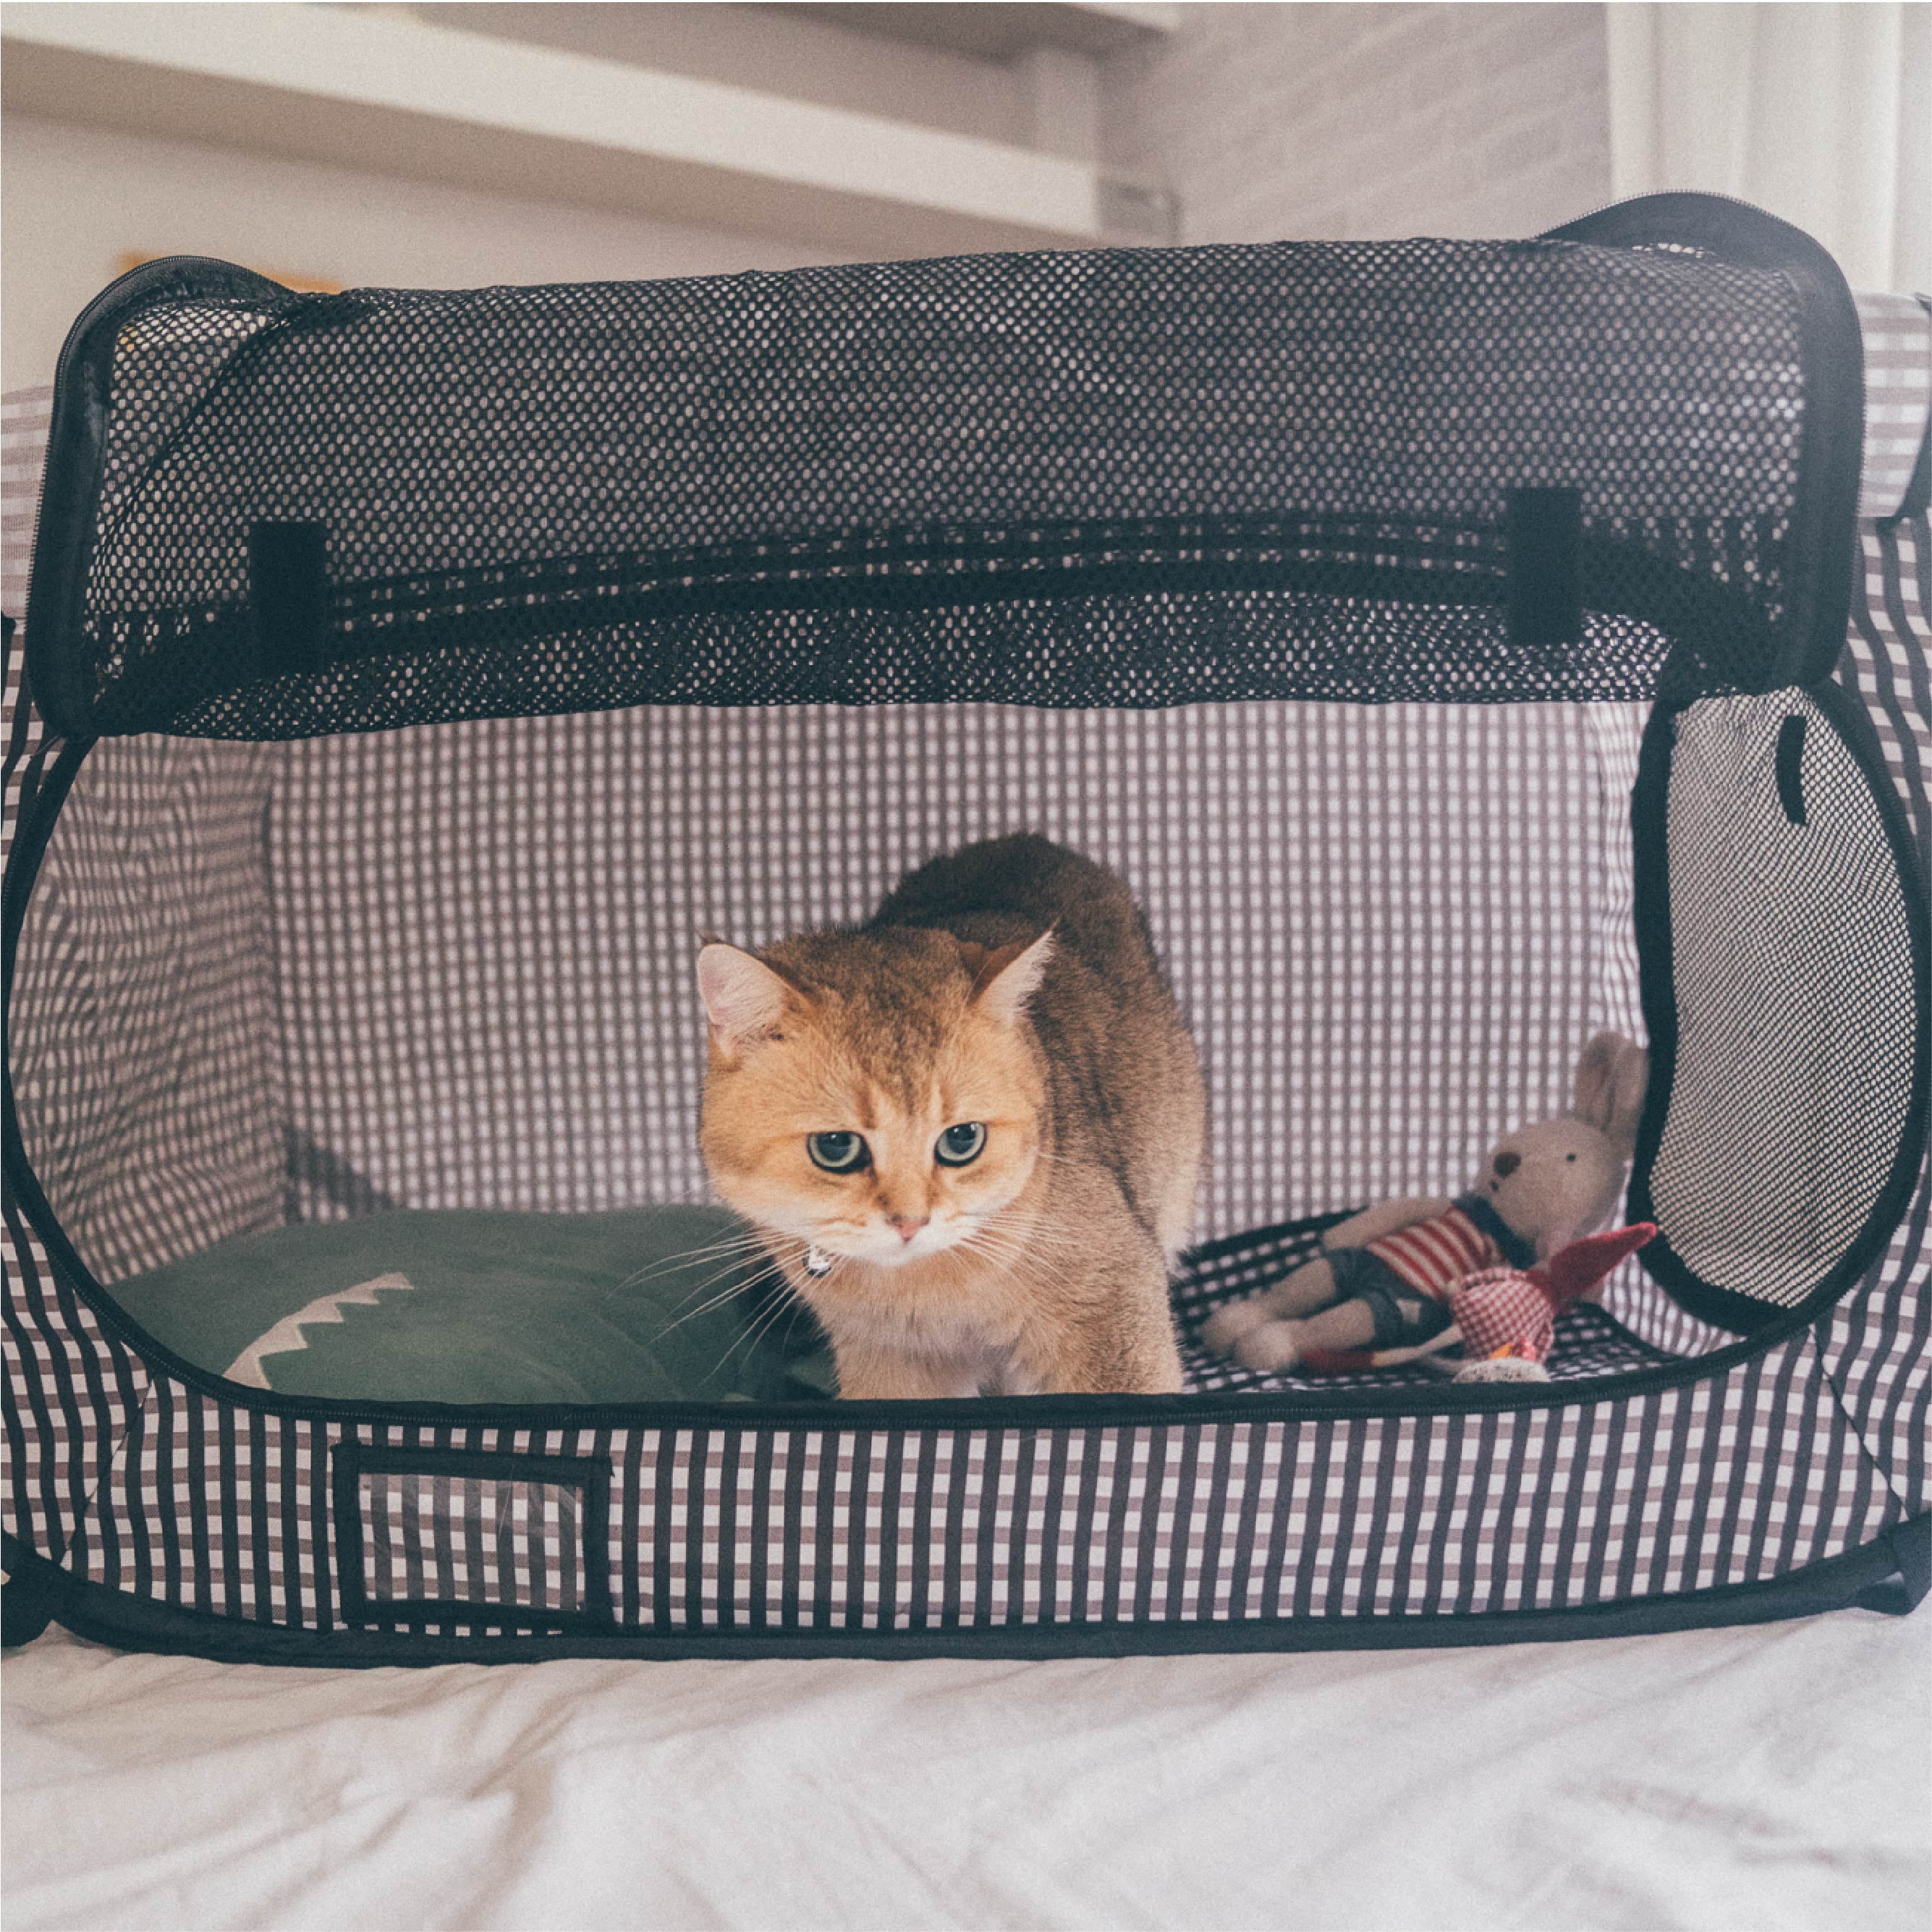 Necoichi Portable Stress Free Cat Cage Always Ready to go! 